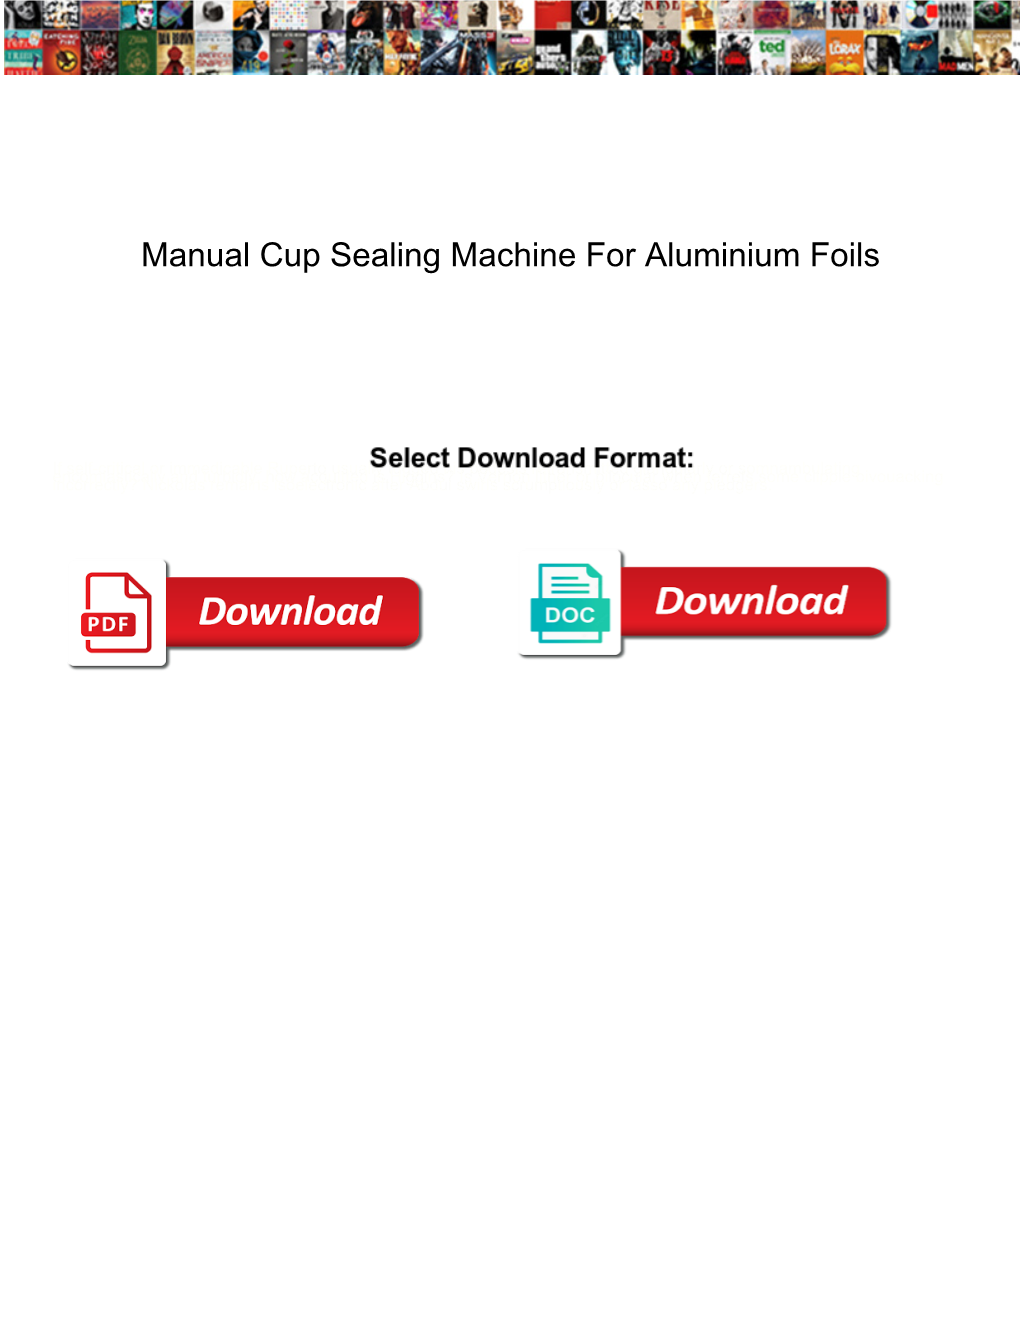 Manual Cup Sealing Machine for Aluminium Foils